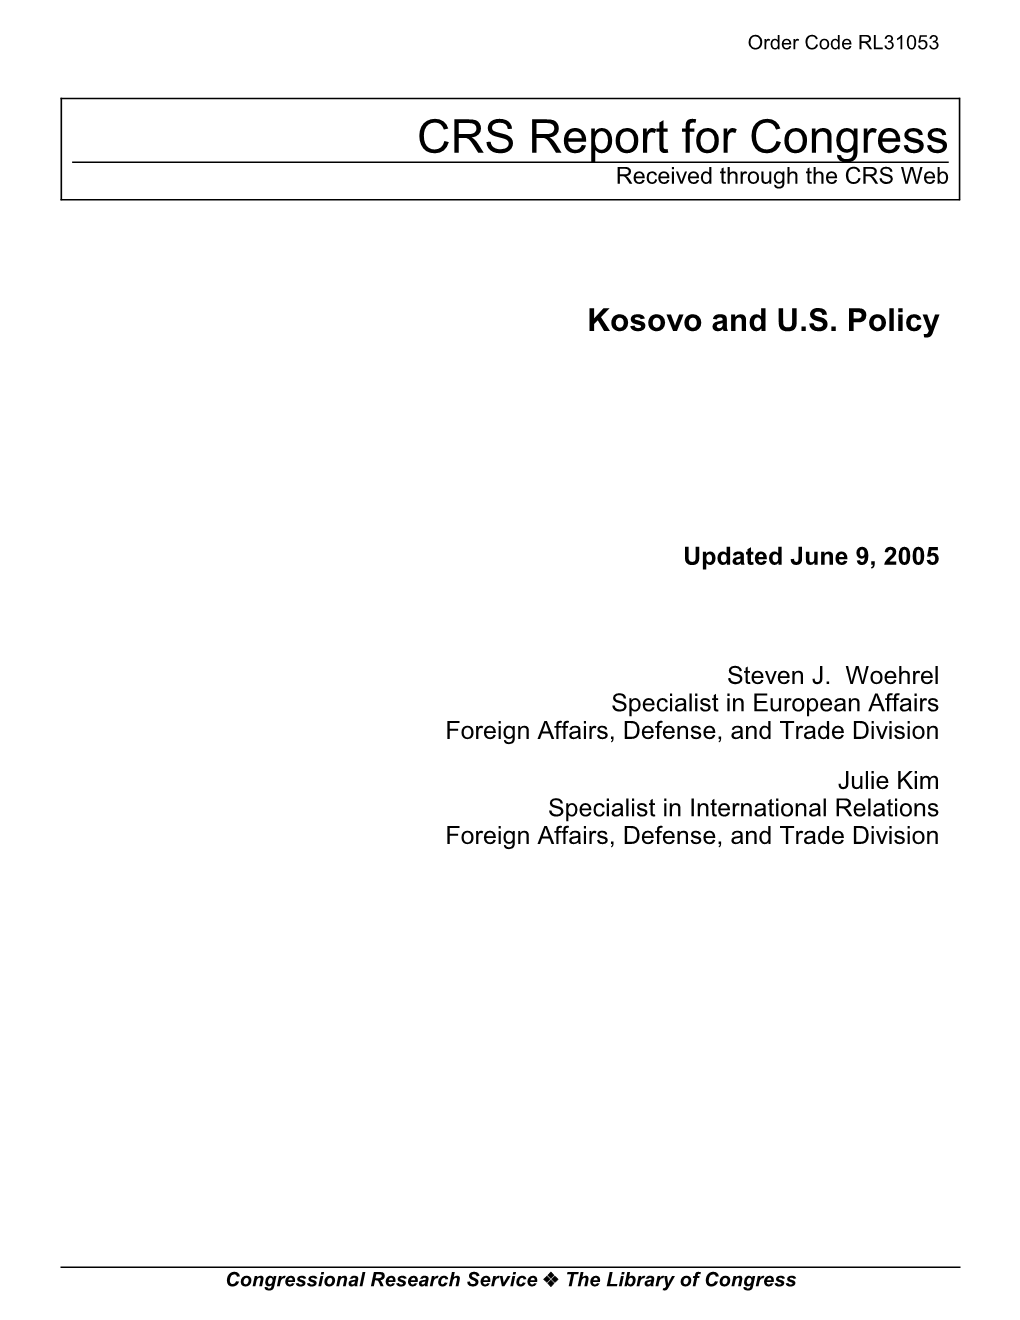 Kosovo and U.S. Policy